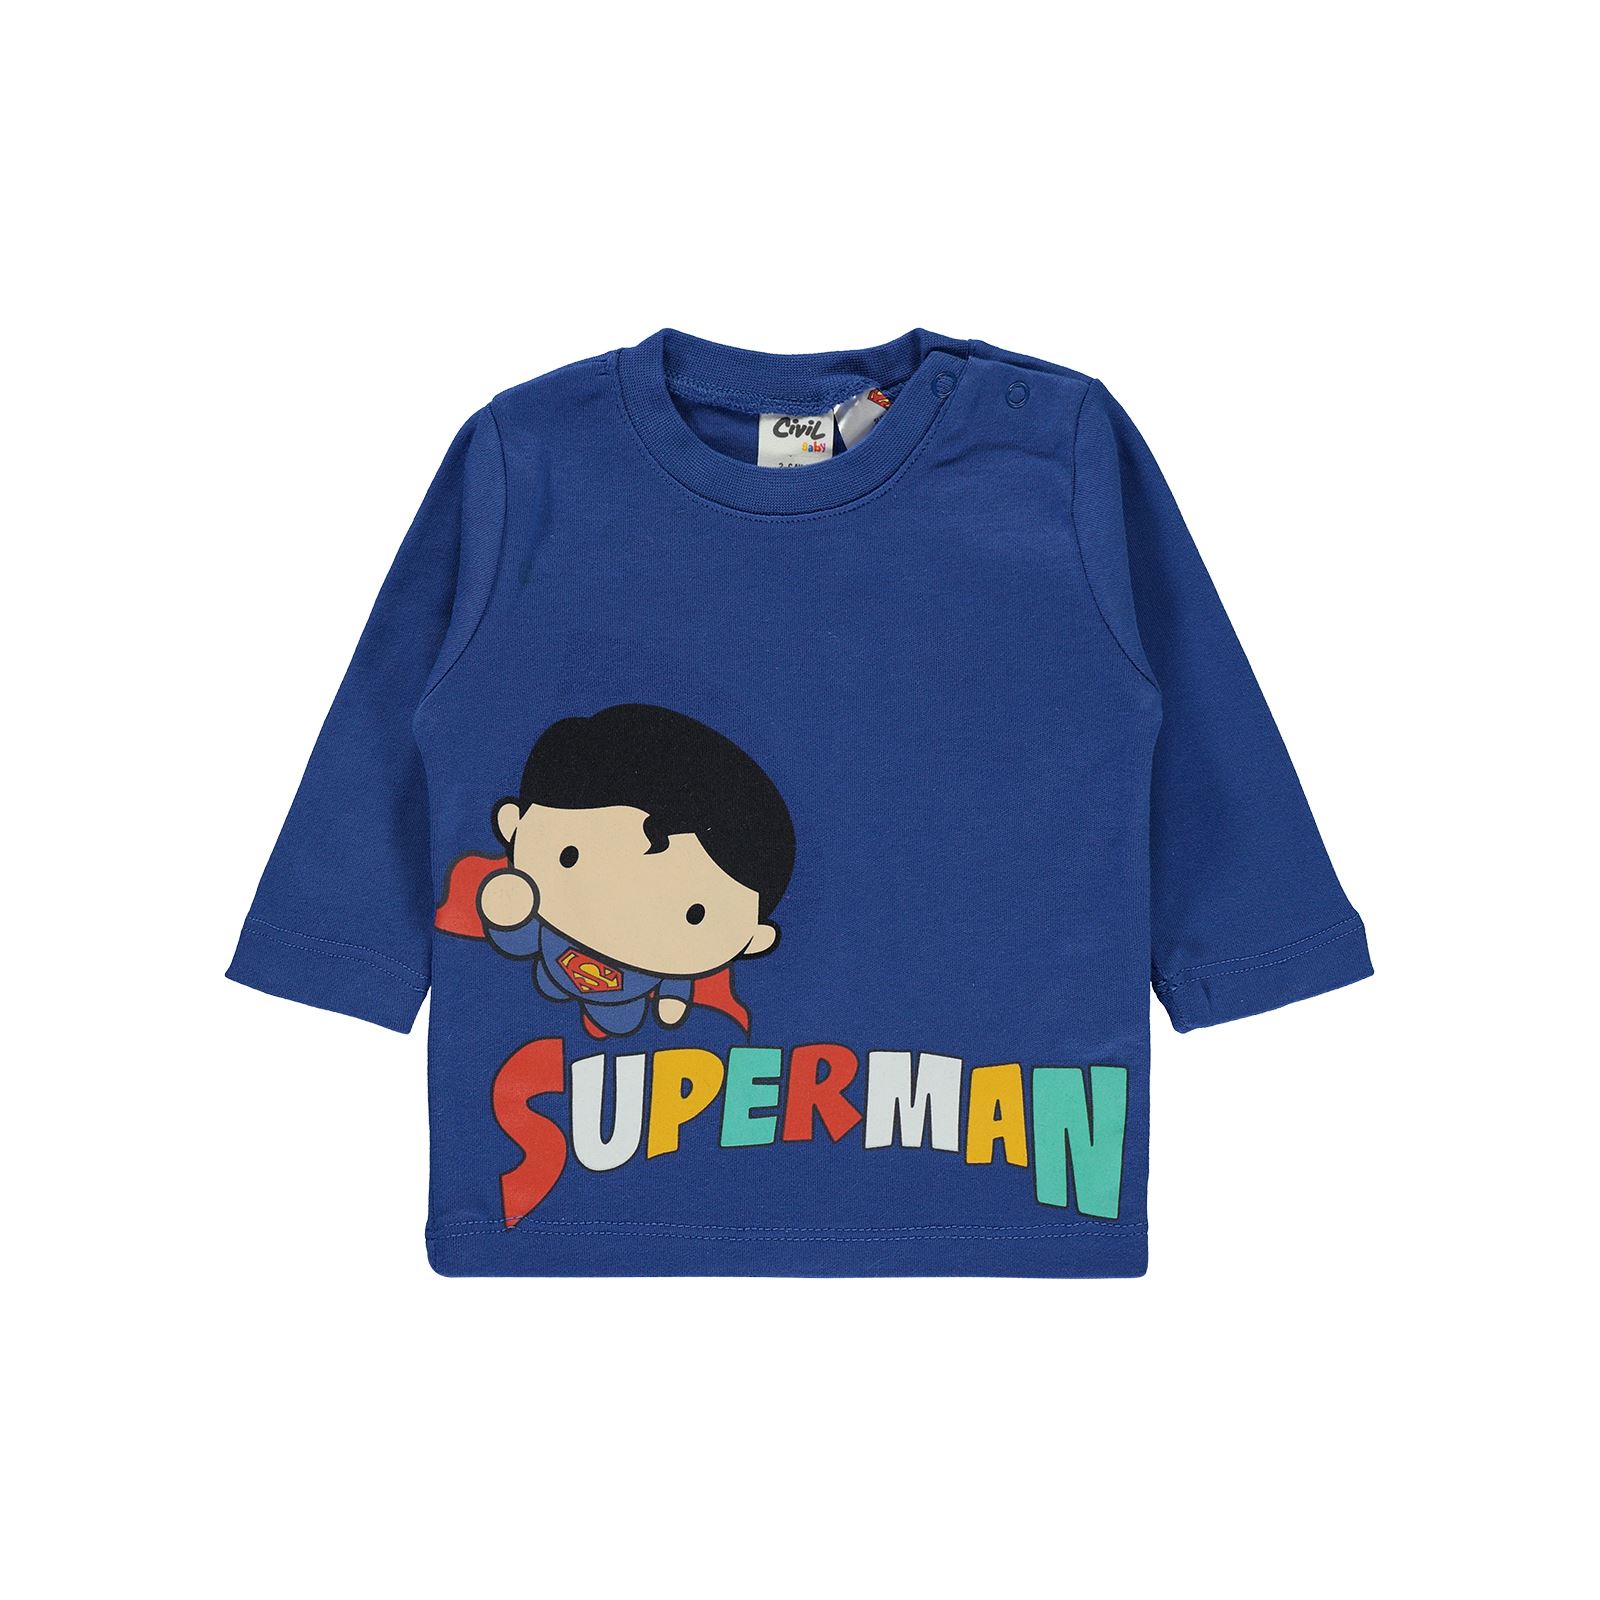 Süperman Erkek Bebek 2'li Sweatshirt 3-18 Ay Lacivert